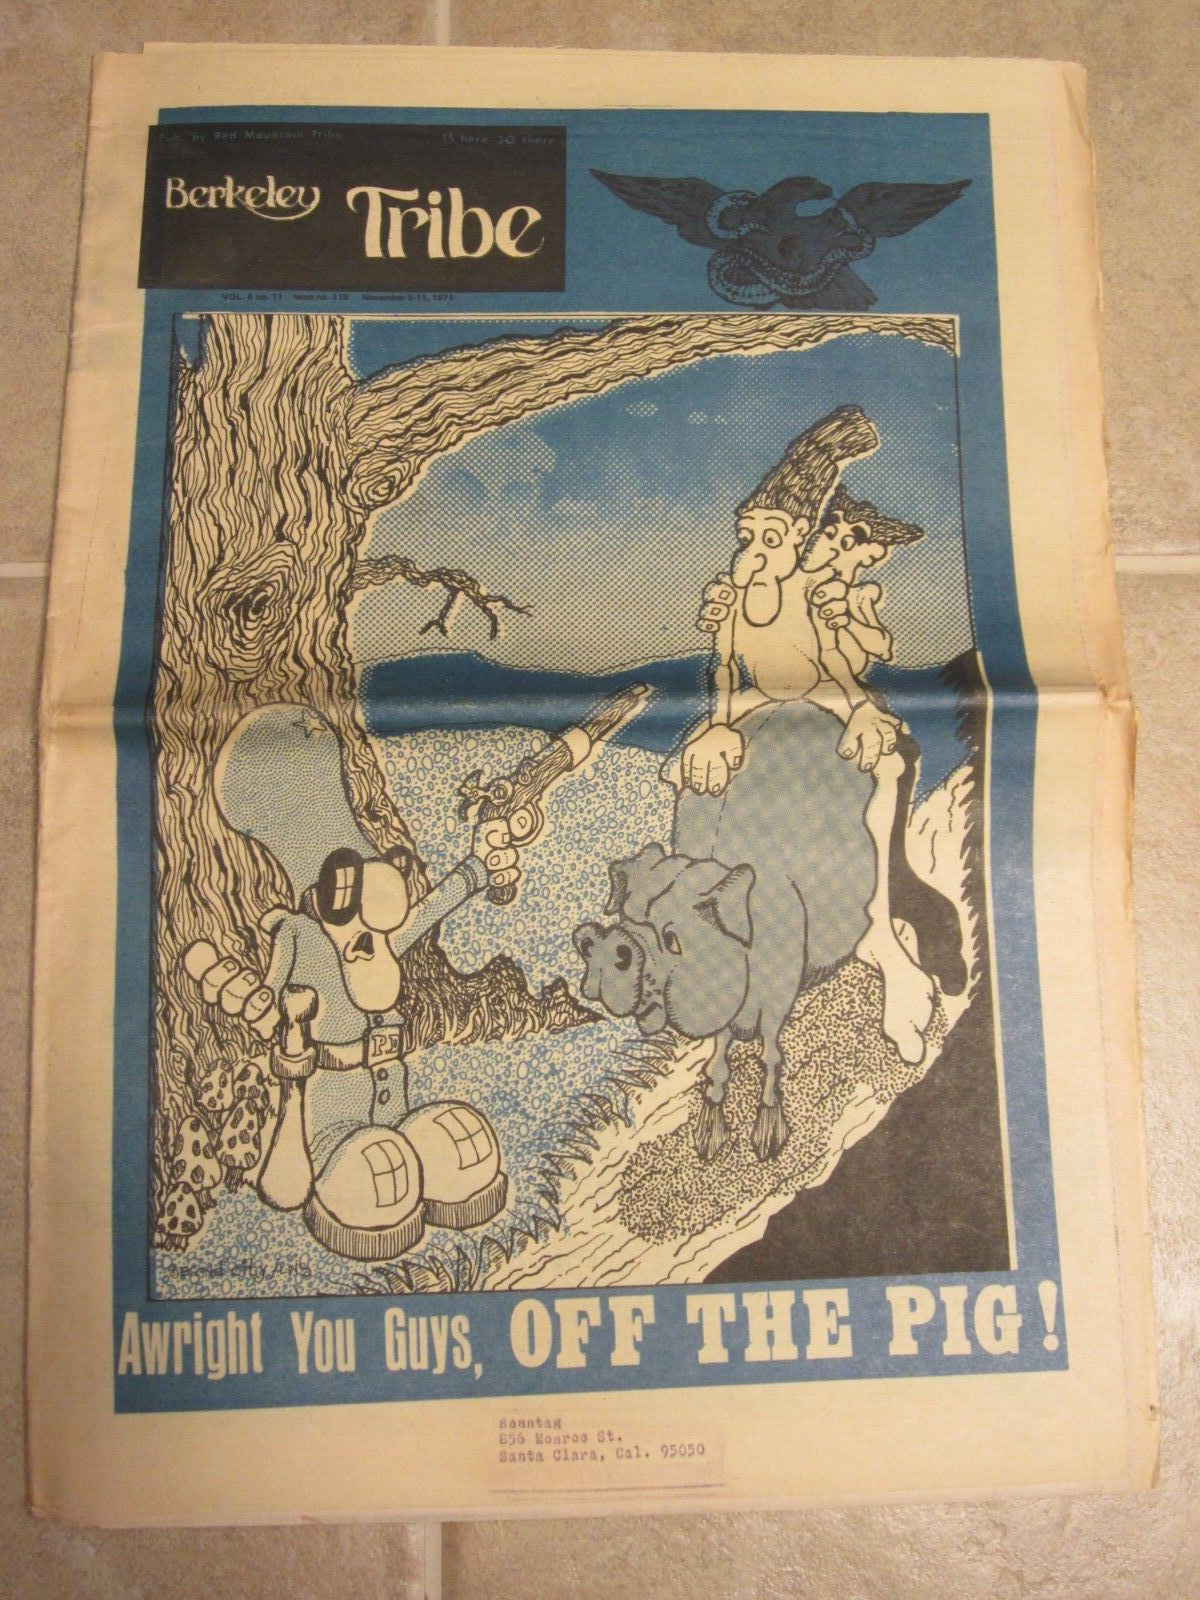 Berkeley Tribe Newspaper November 1971 Awright You Guys, Off The Pig